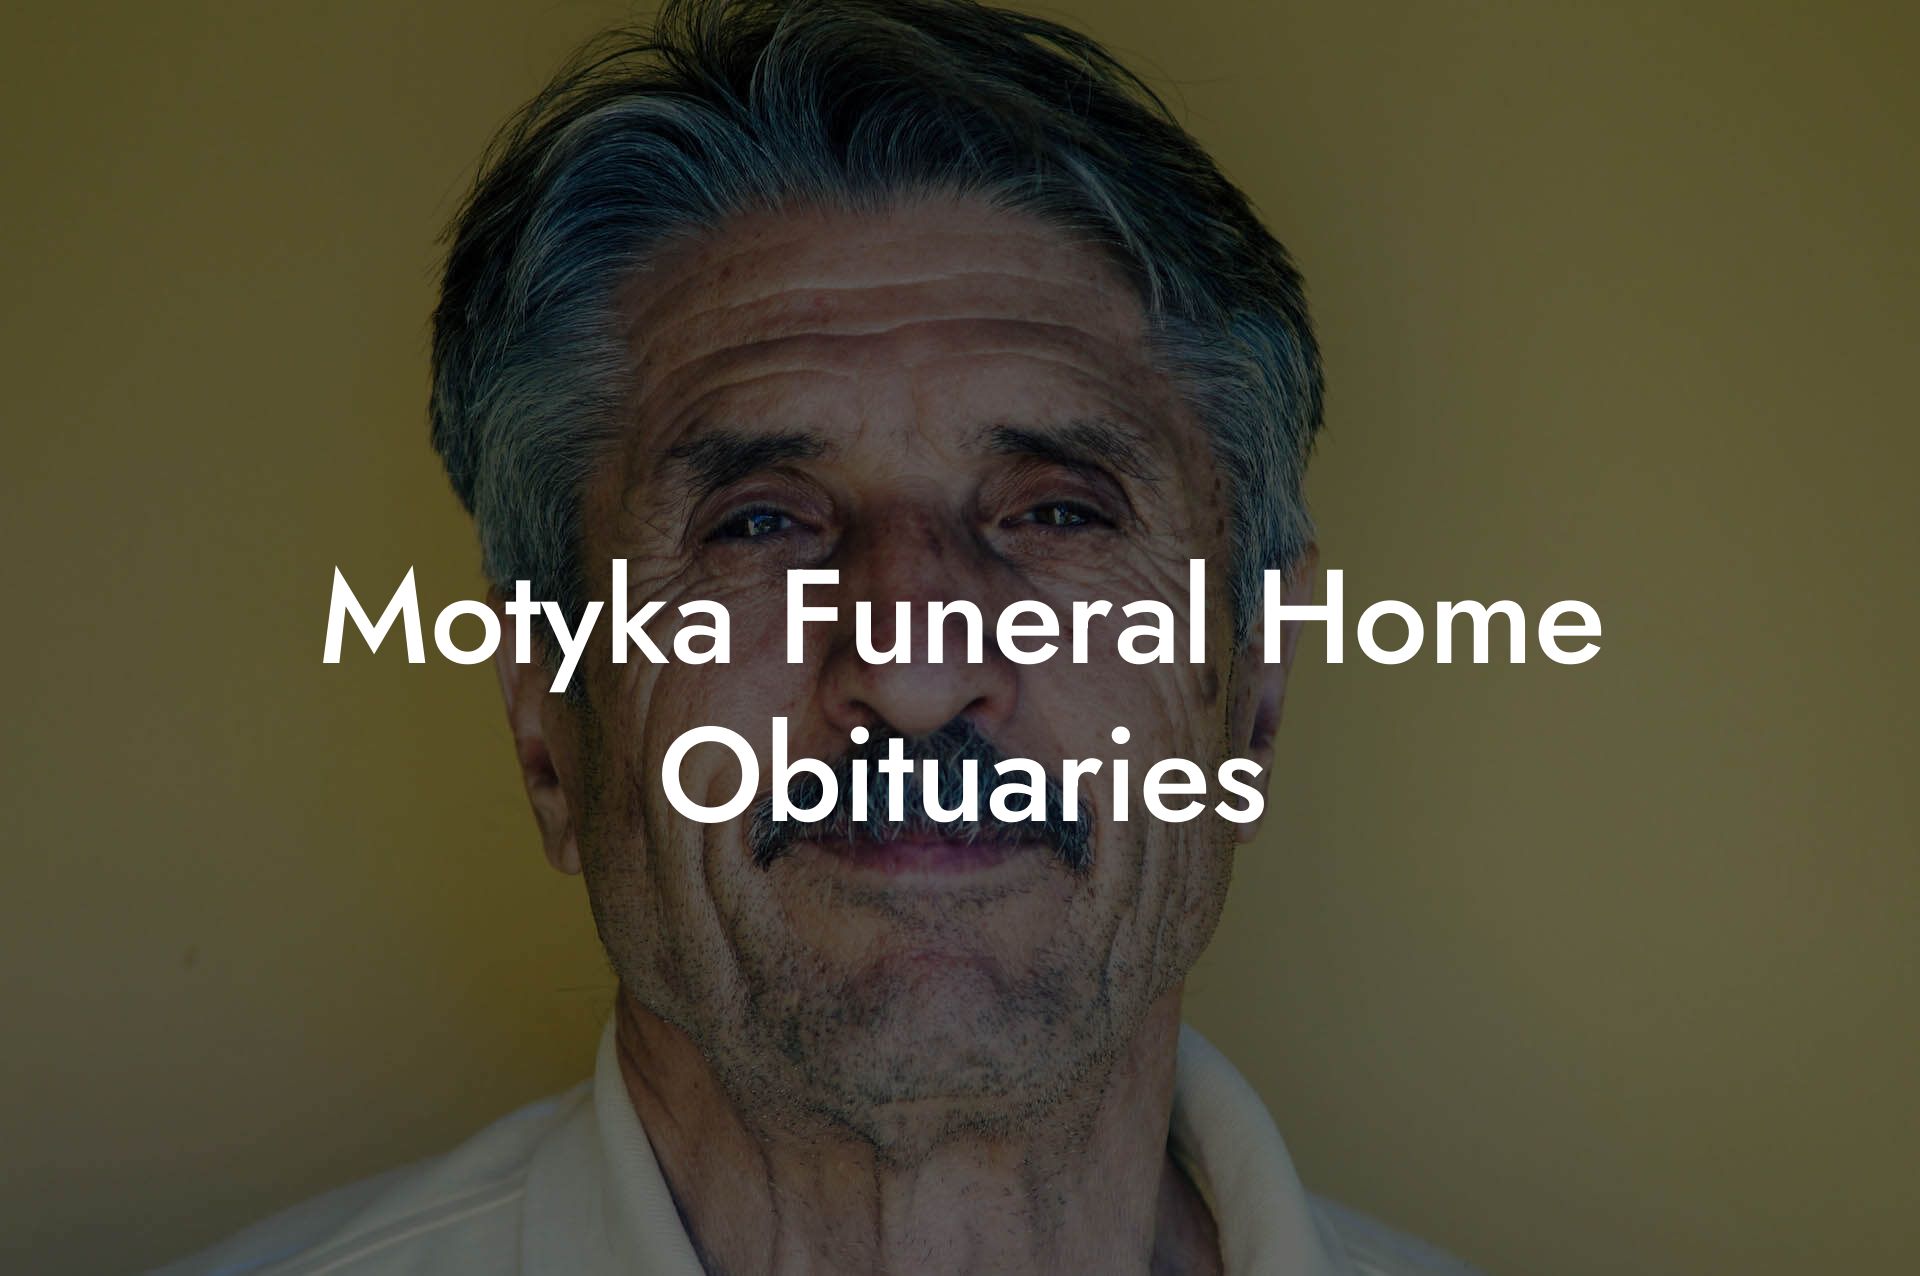 Motyka Funeral Home Obituaries